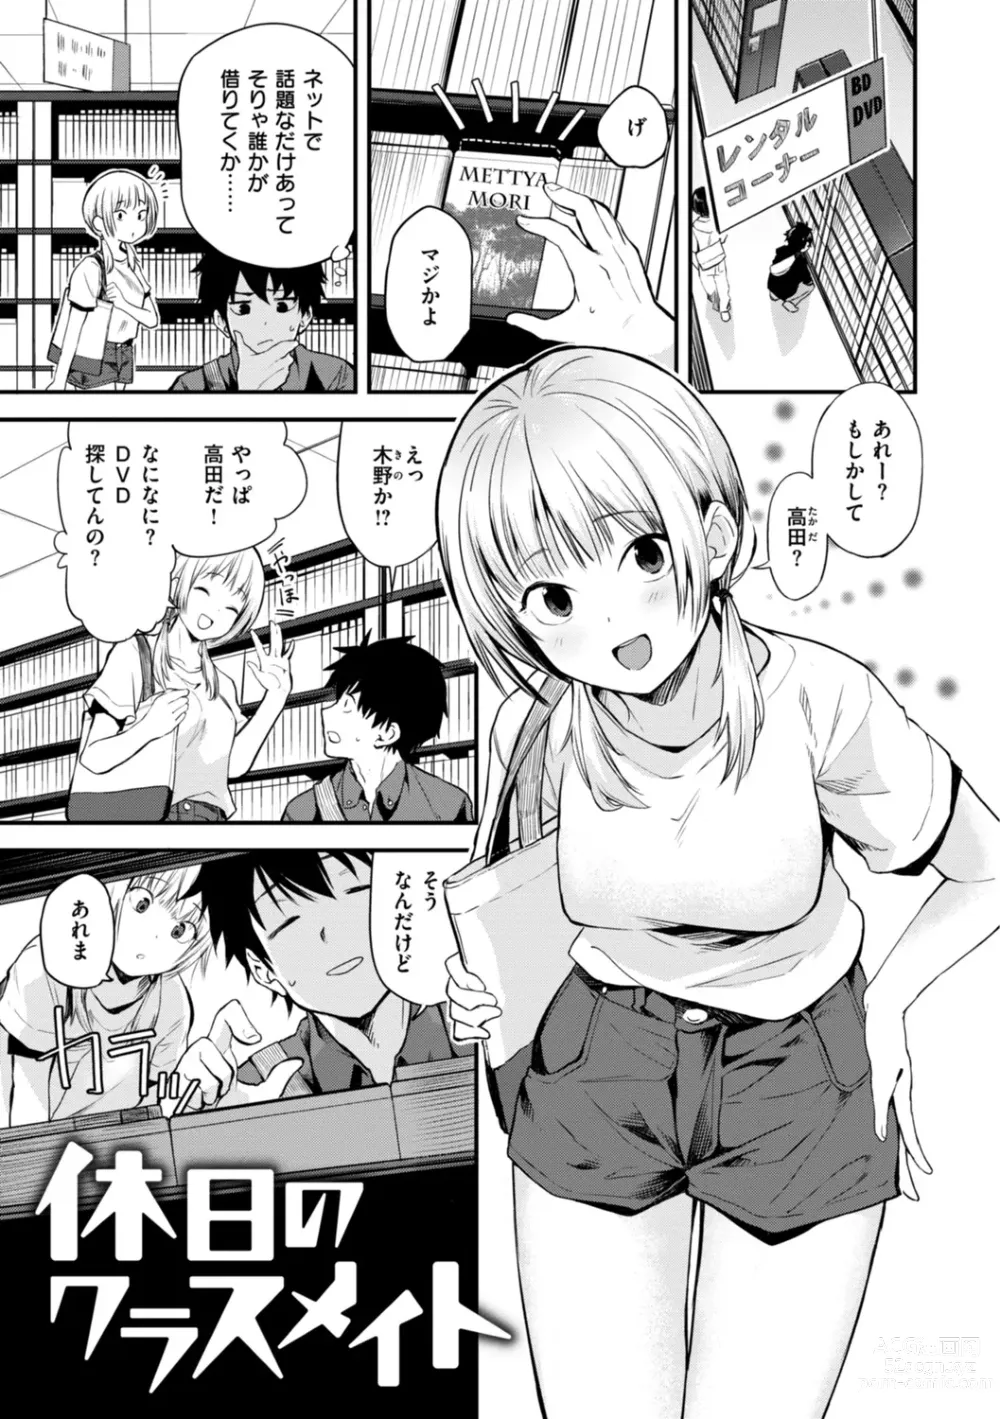 Page 3 of manga Jaa, Ecchi Shichau? - Shall we have H then?